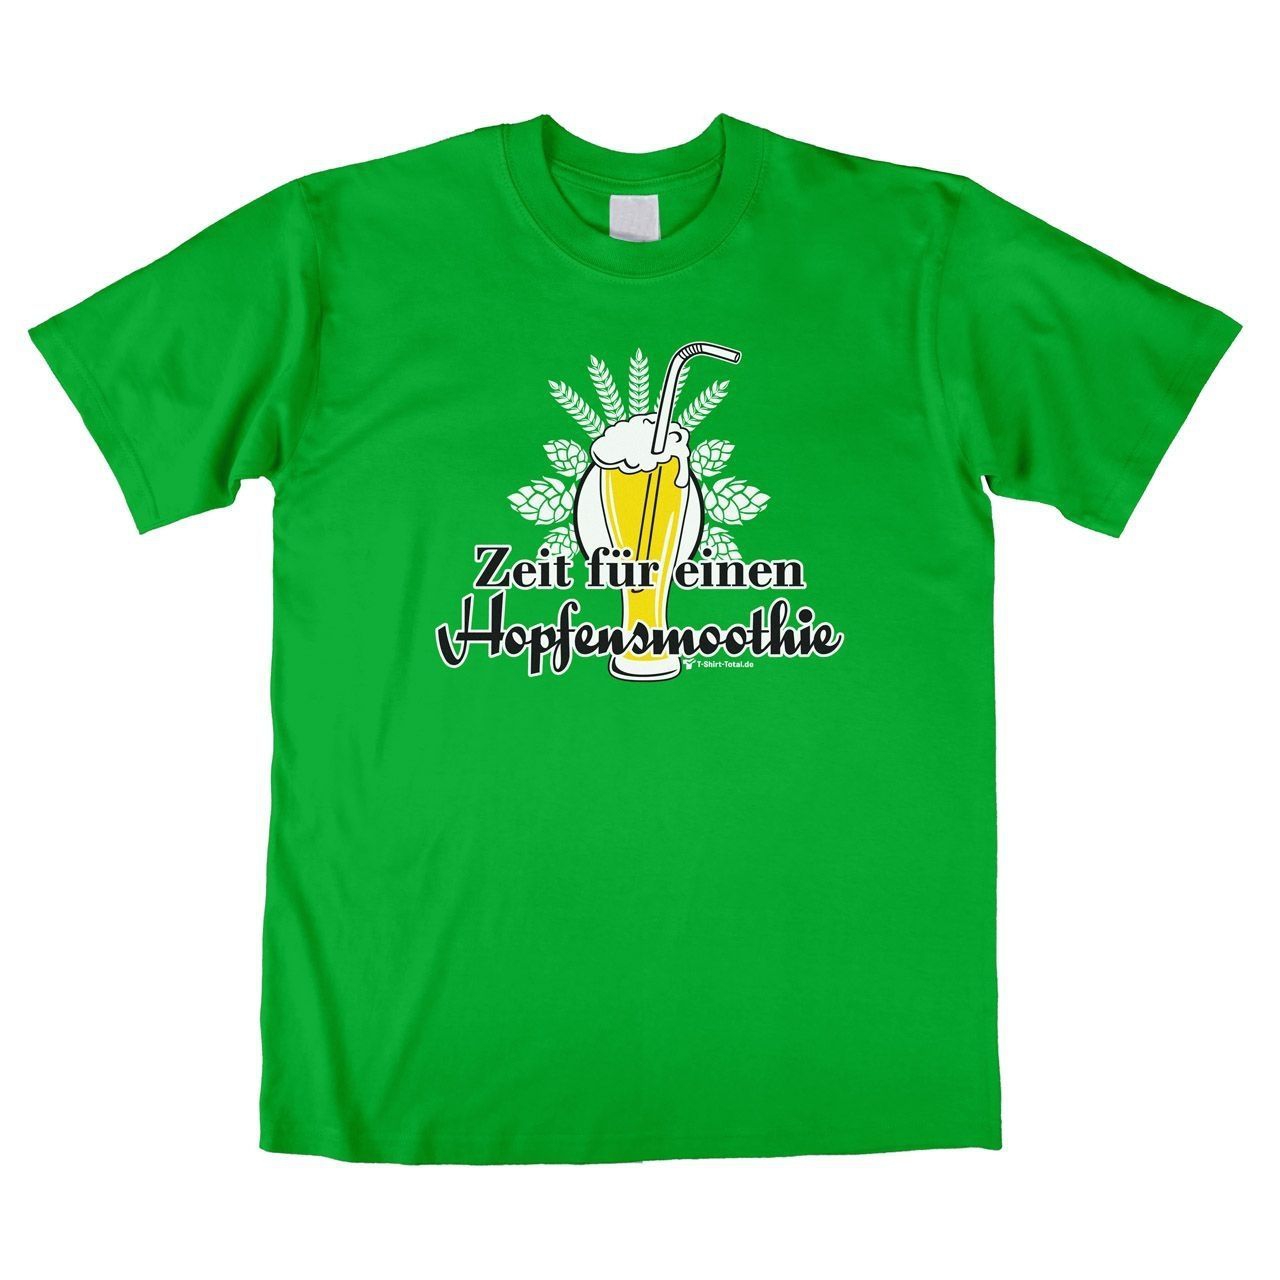 Hopfensmoothie Unisex T-Shirt grün Large